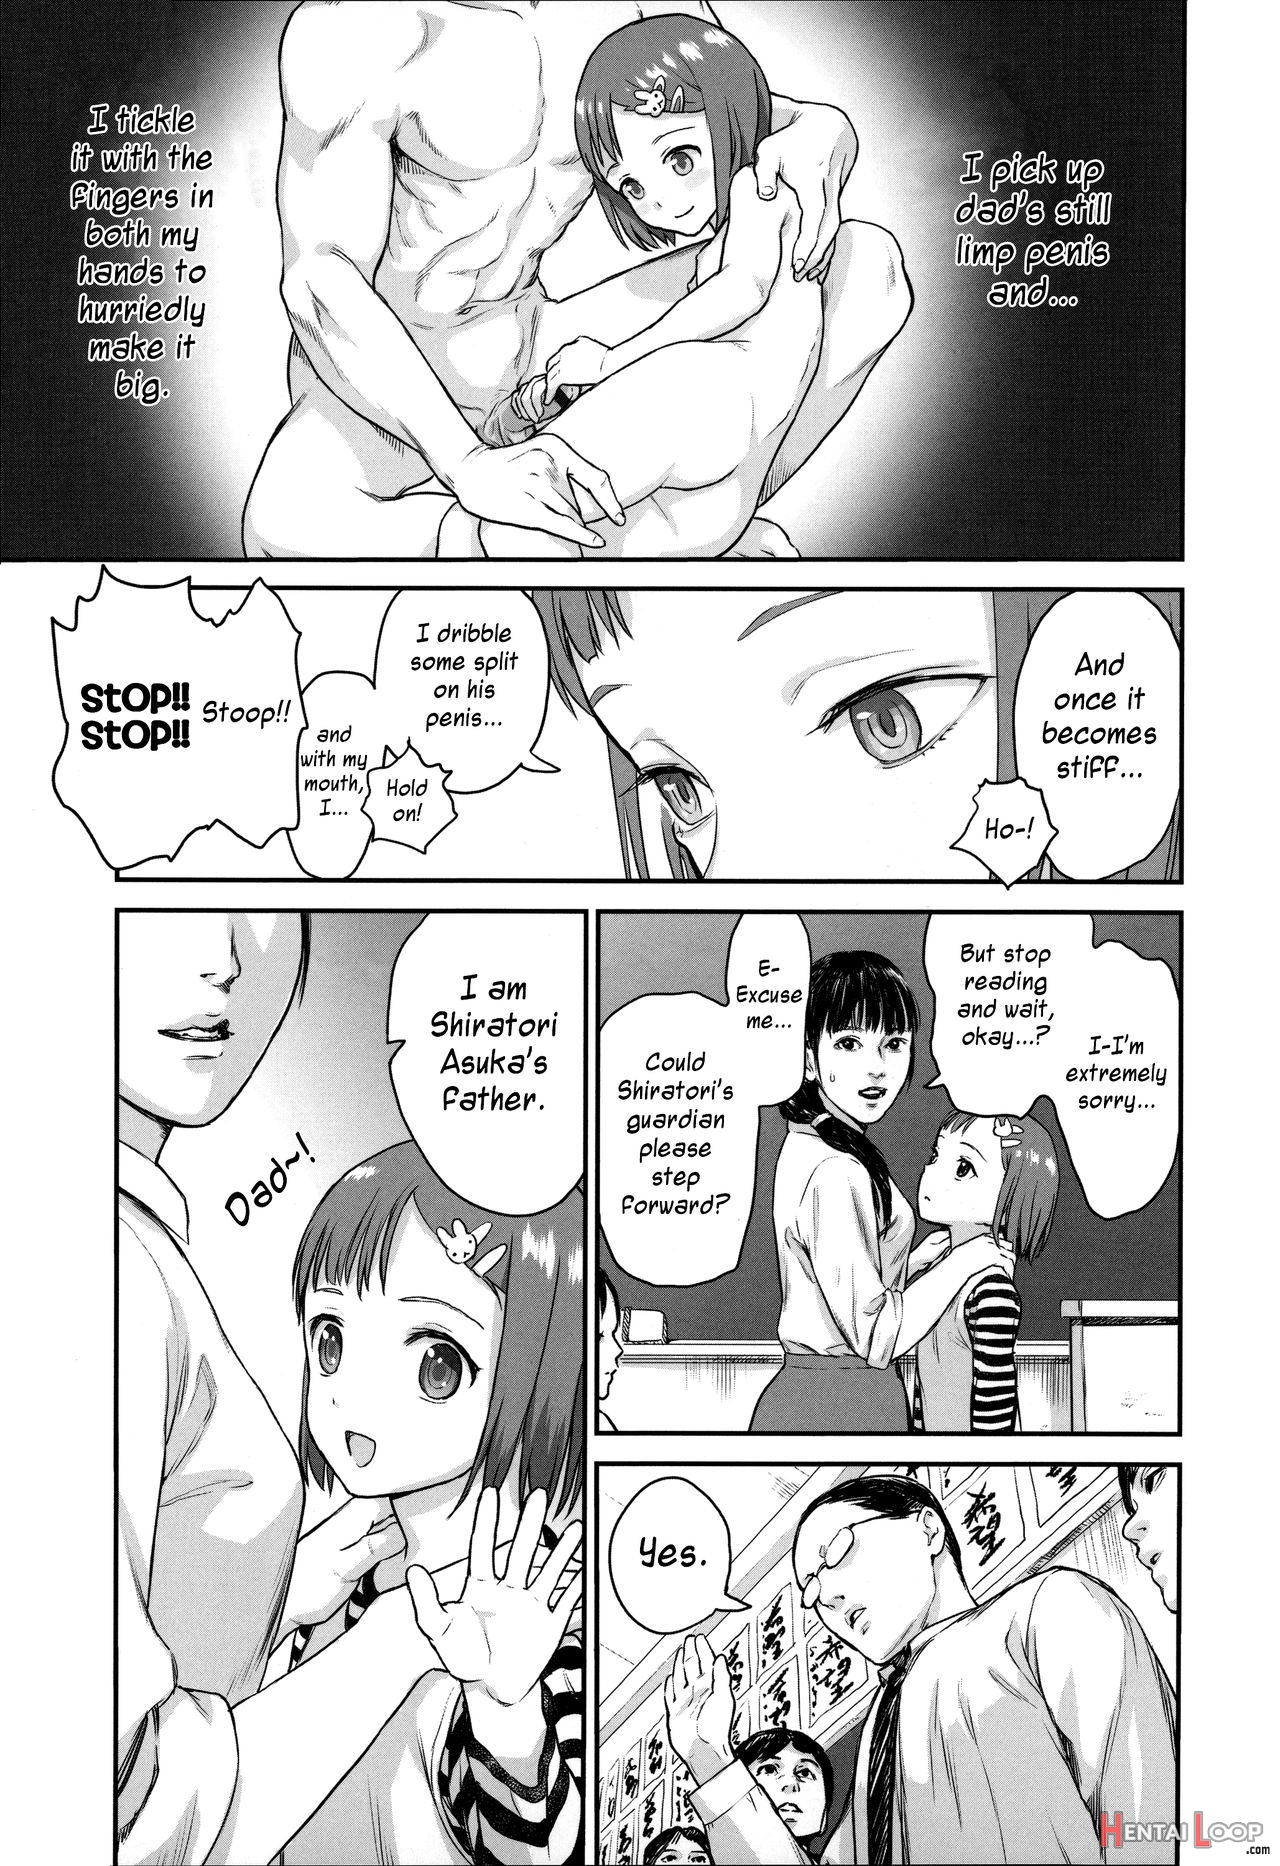 Shoujo Netsu - Girls Fever page 9